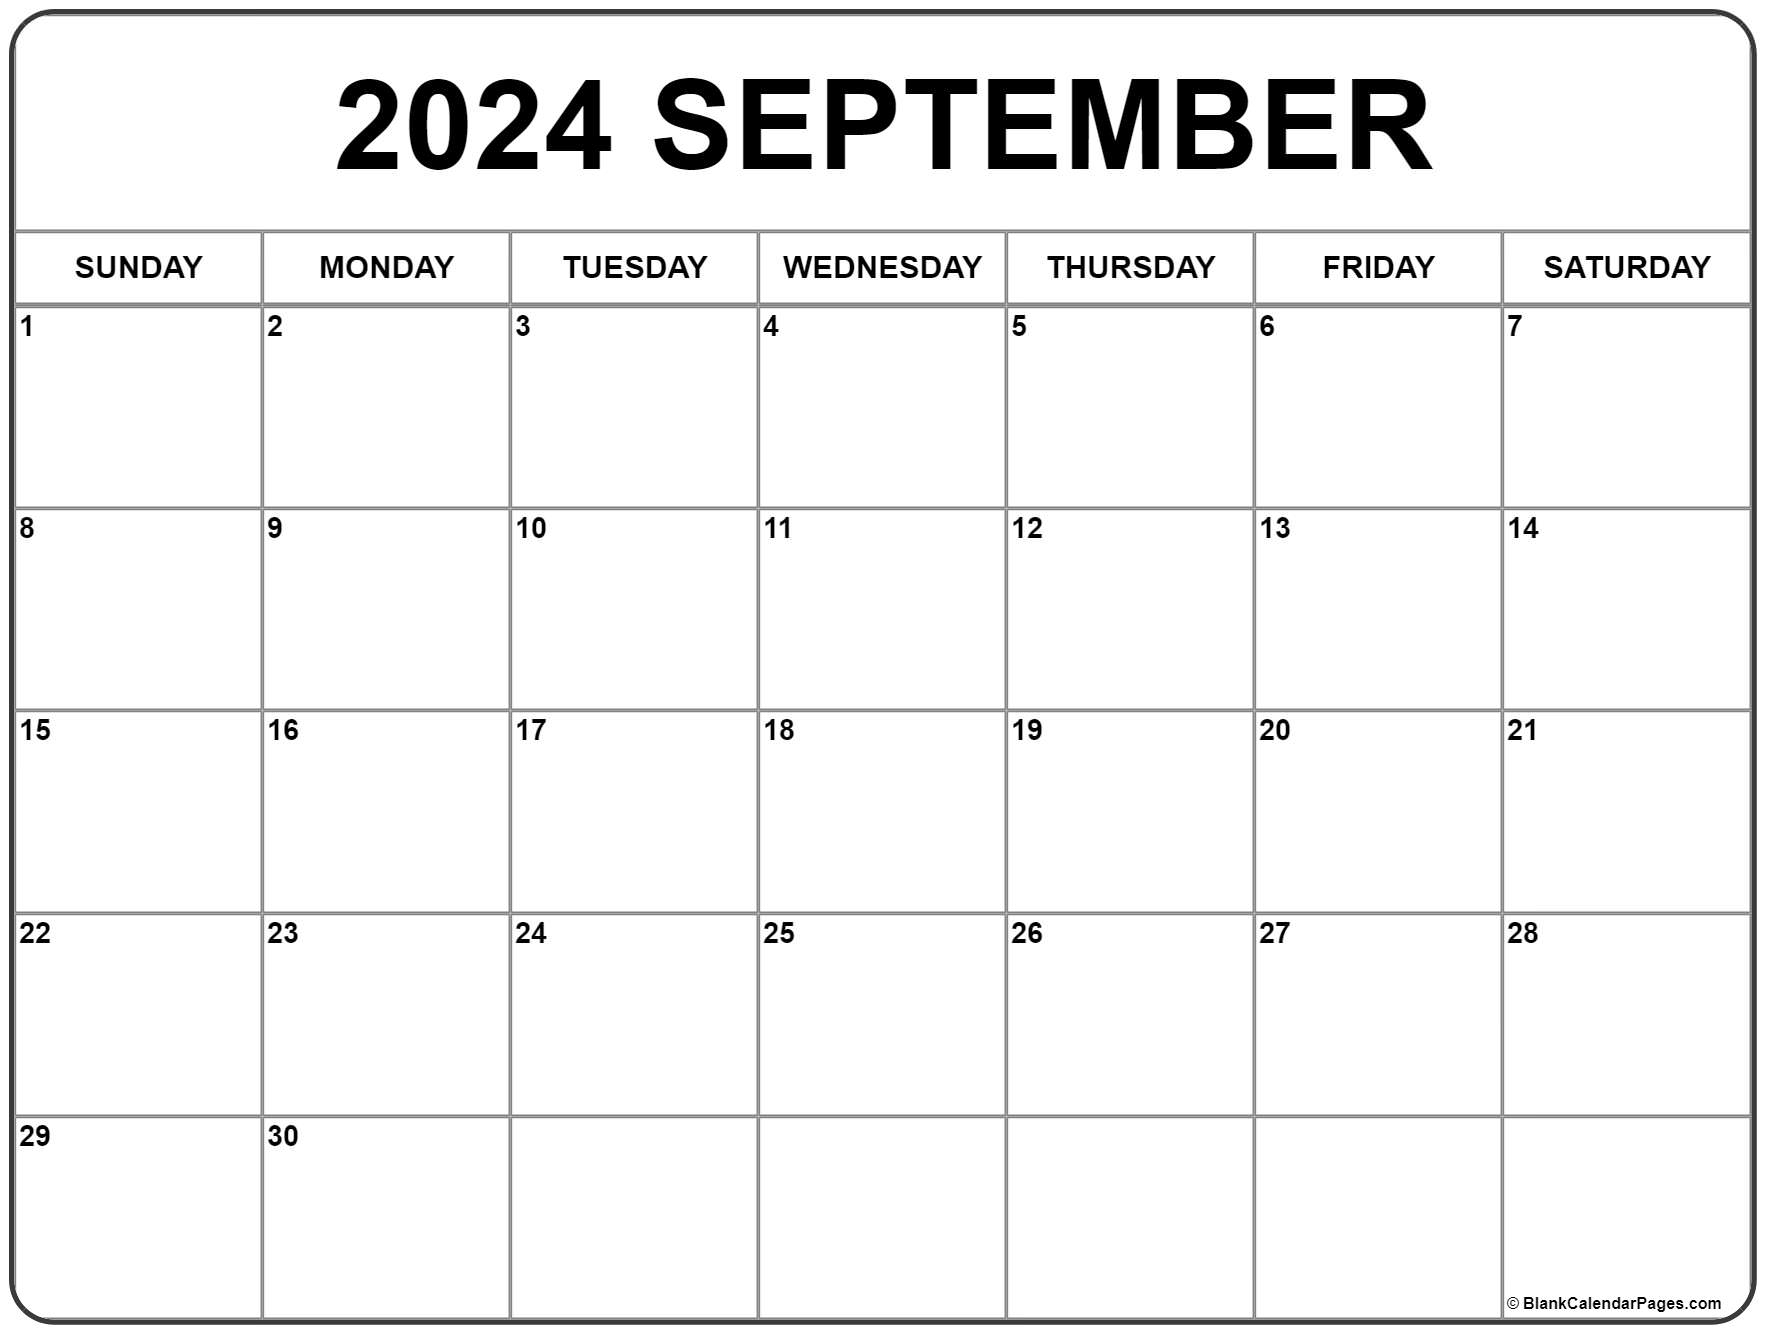 September 2024 Calendar | Free Printable Calendar for Free Printable Calendar 2024 September